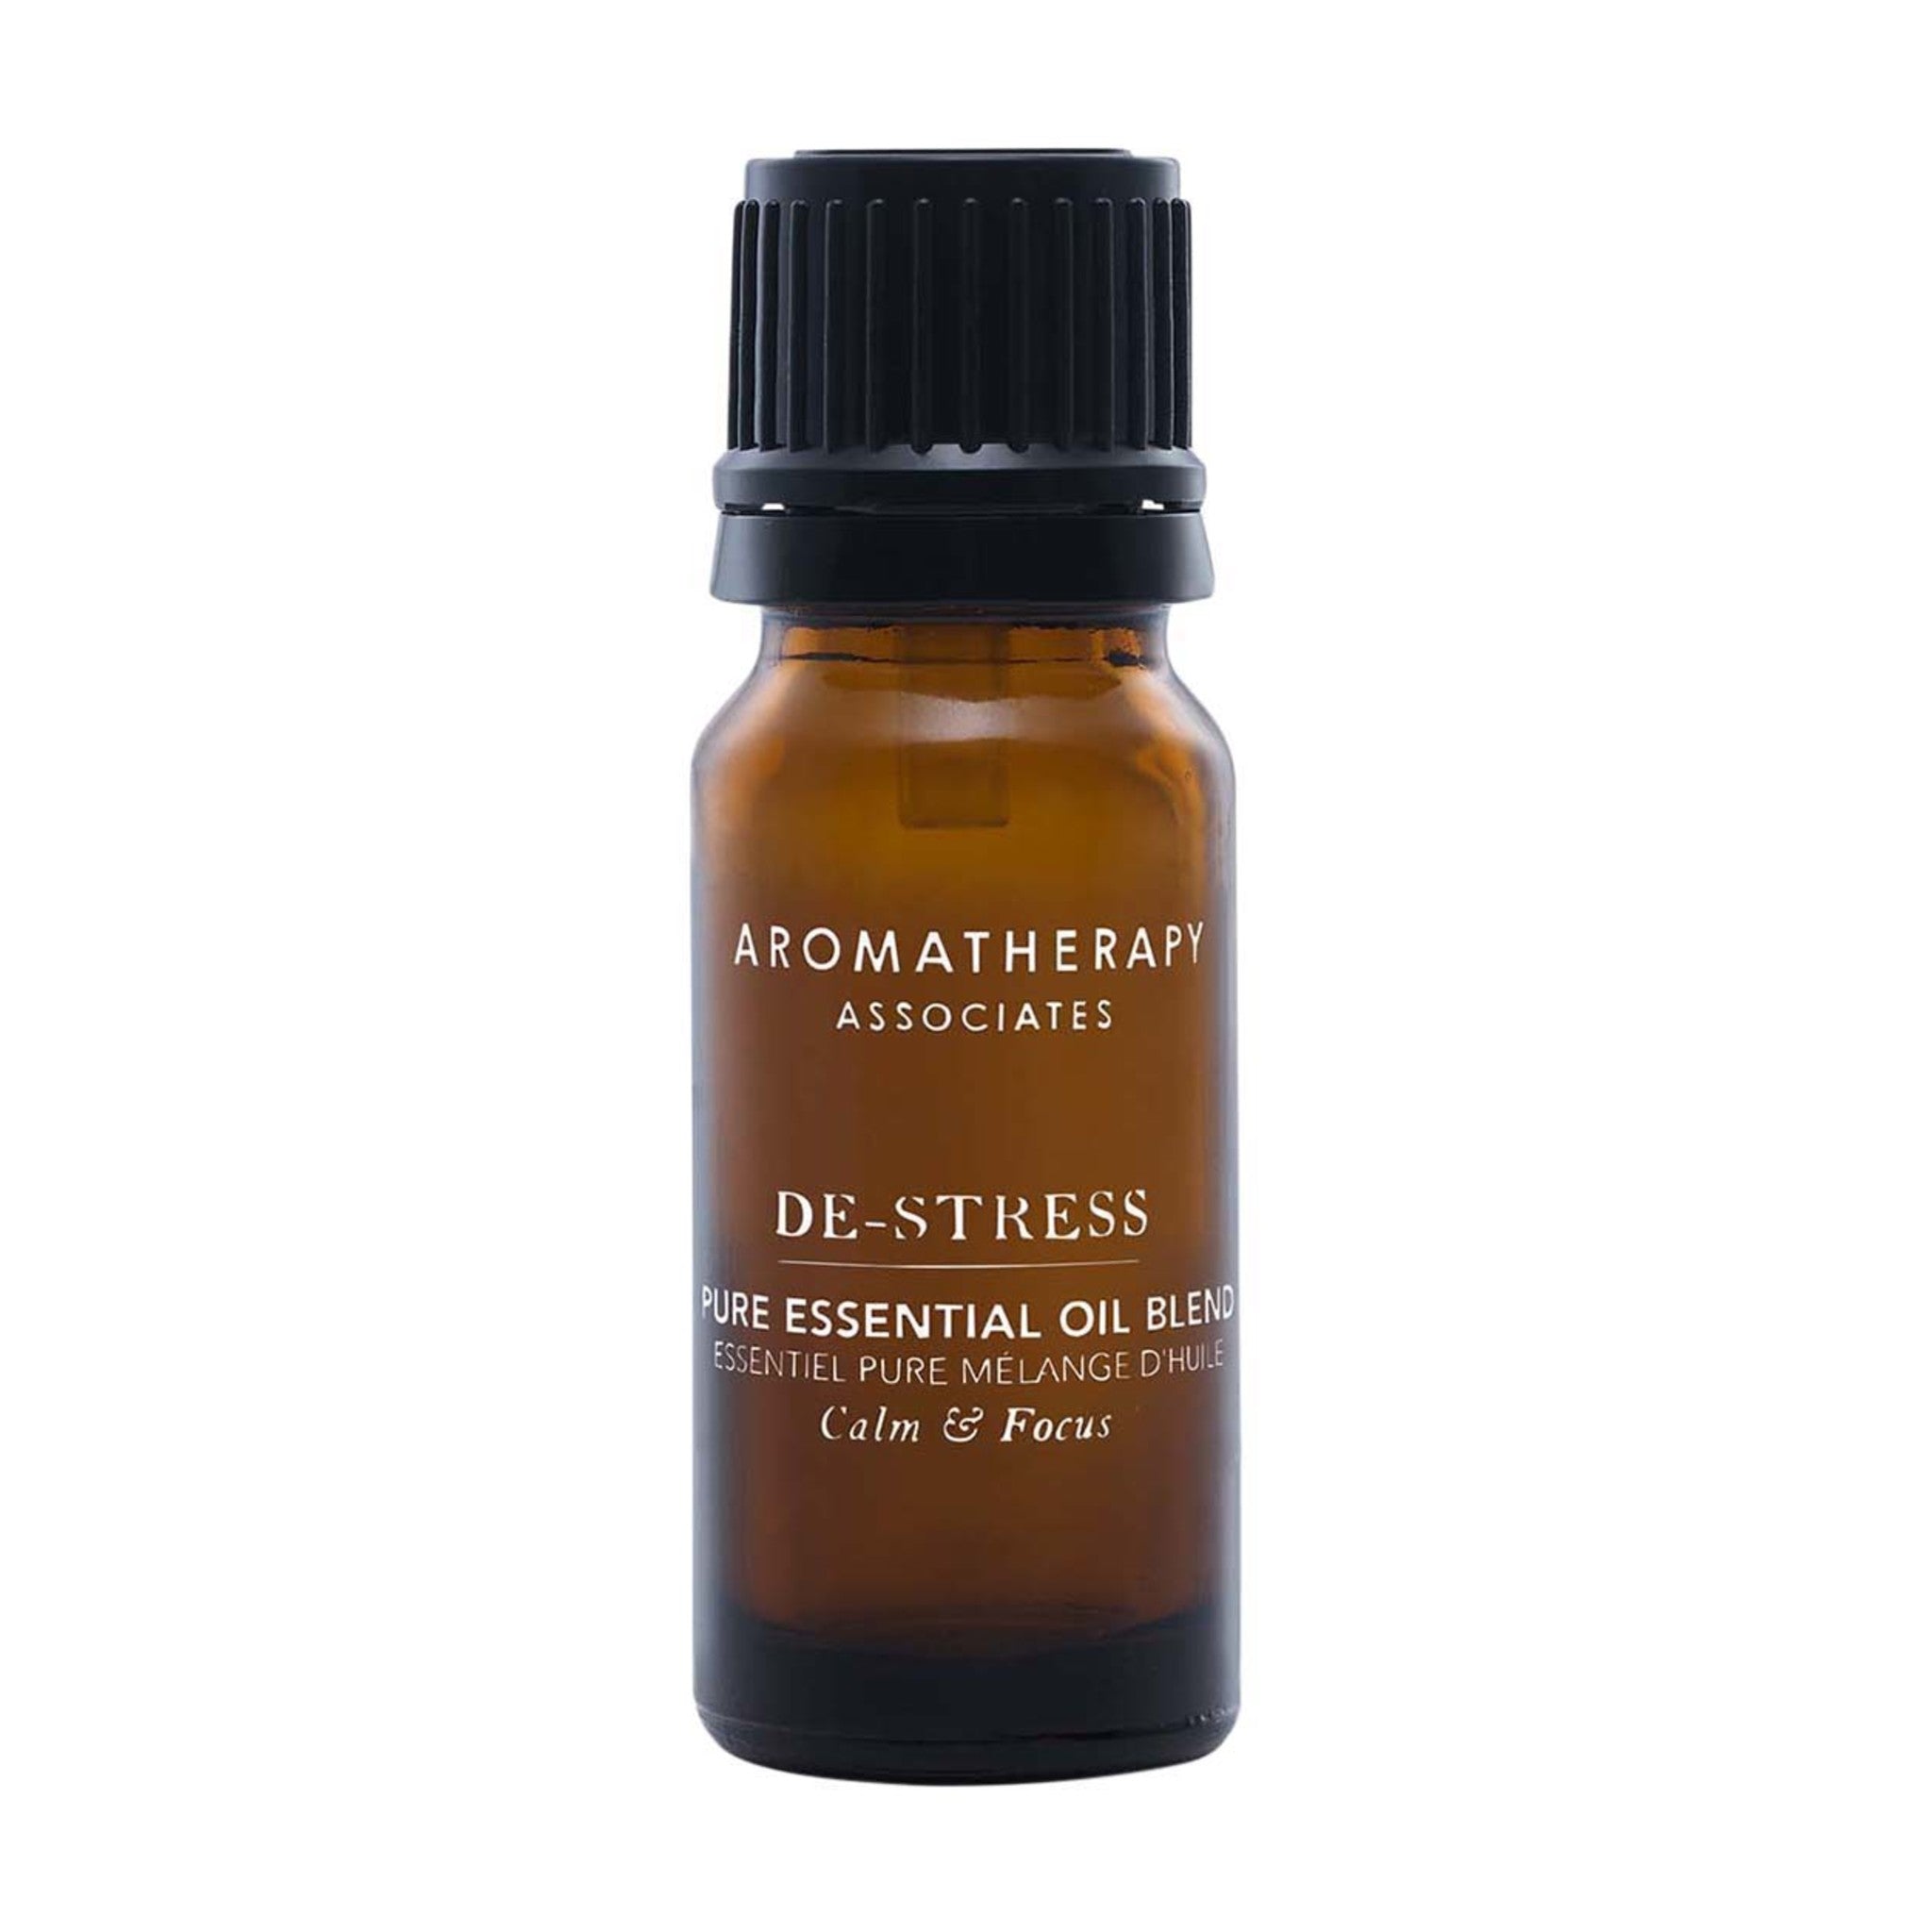 Aromatherapy Associates De-Stress Pure Essential Oil Blend main image.